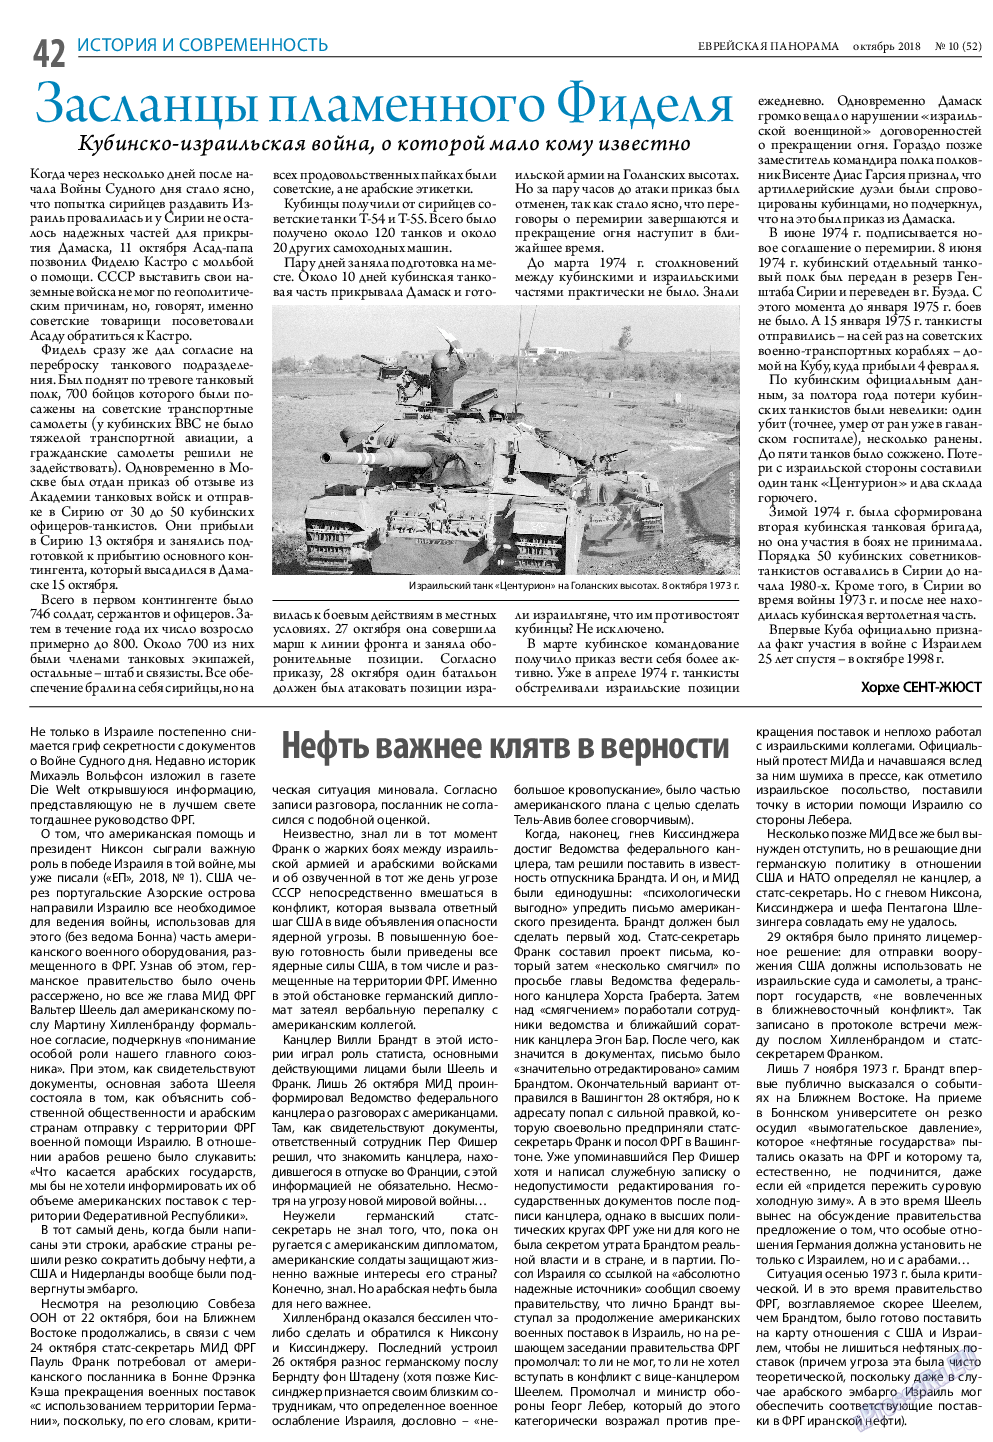 Еврейская панорама, газета. 2018 №10 стр.42